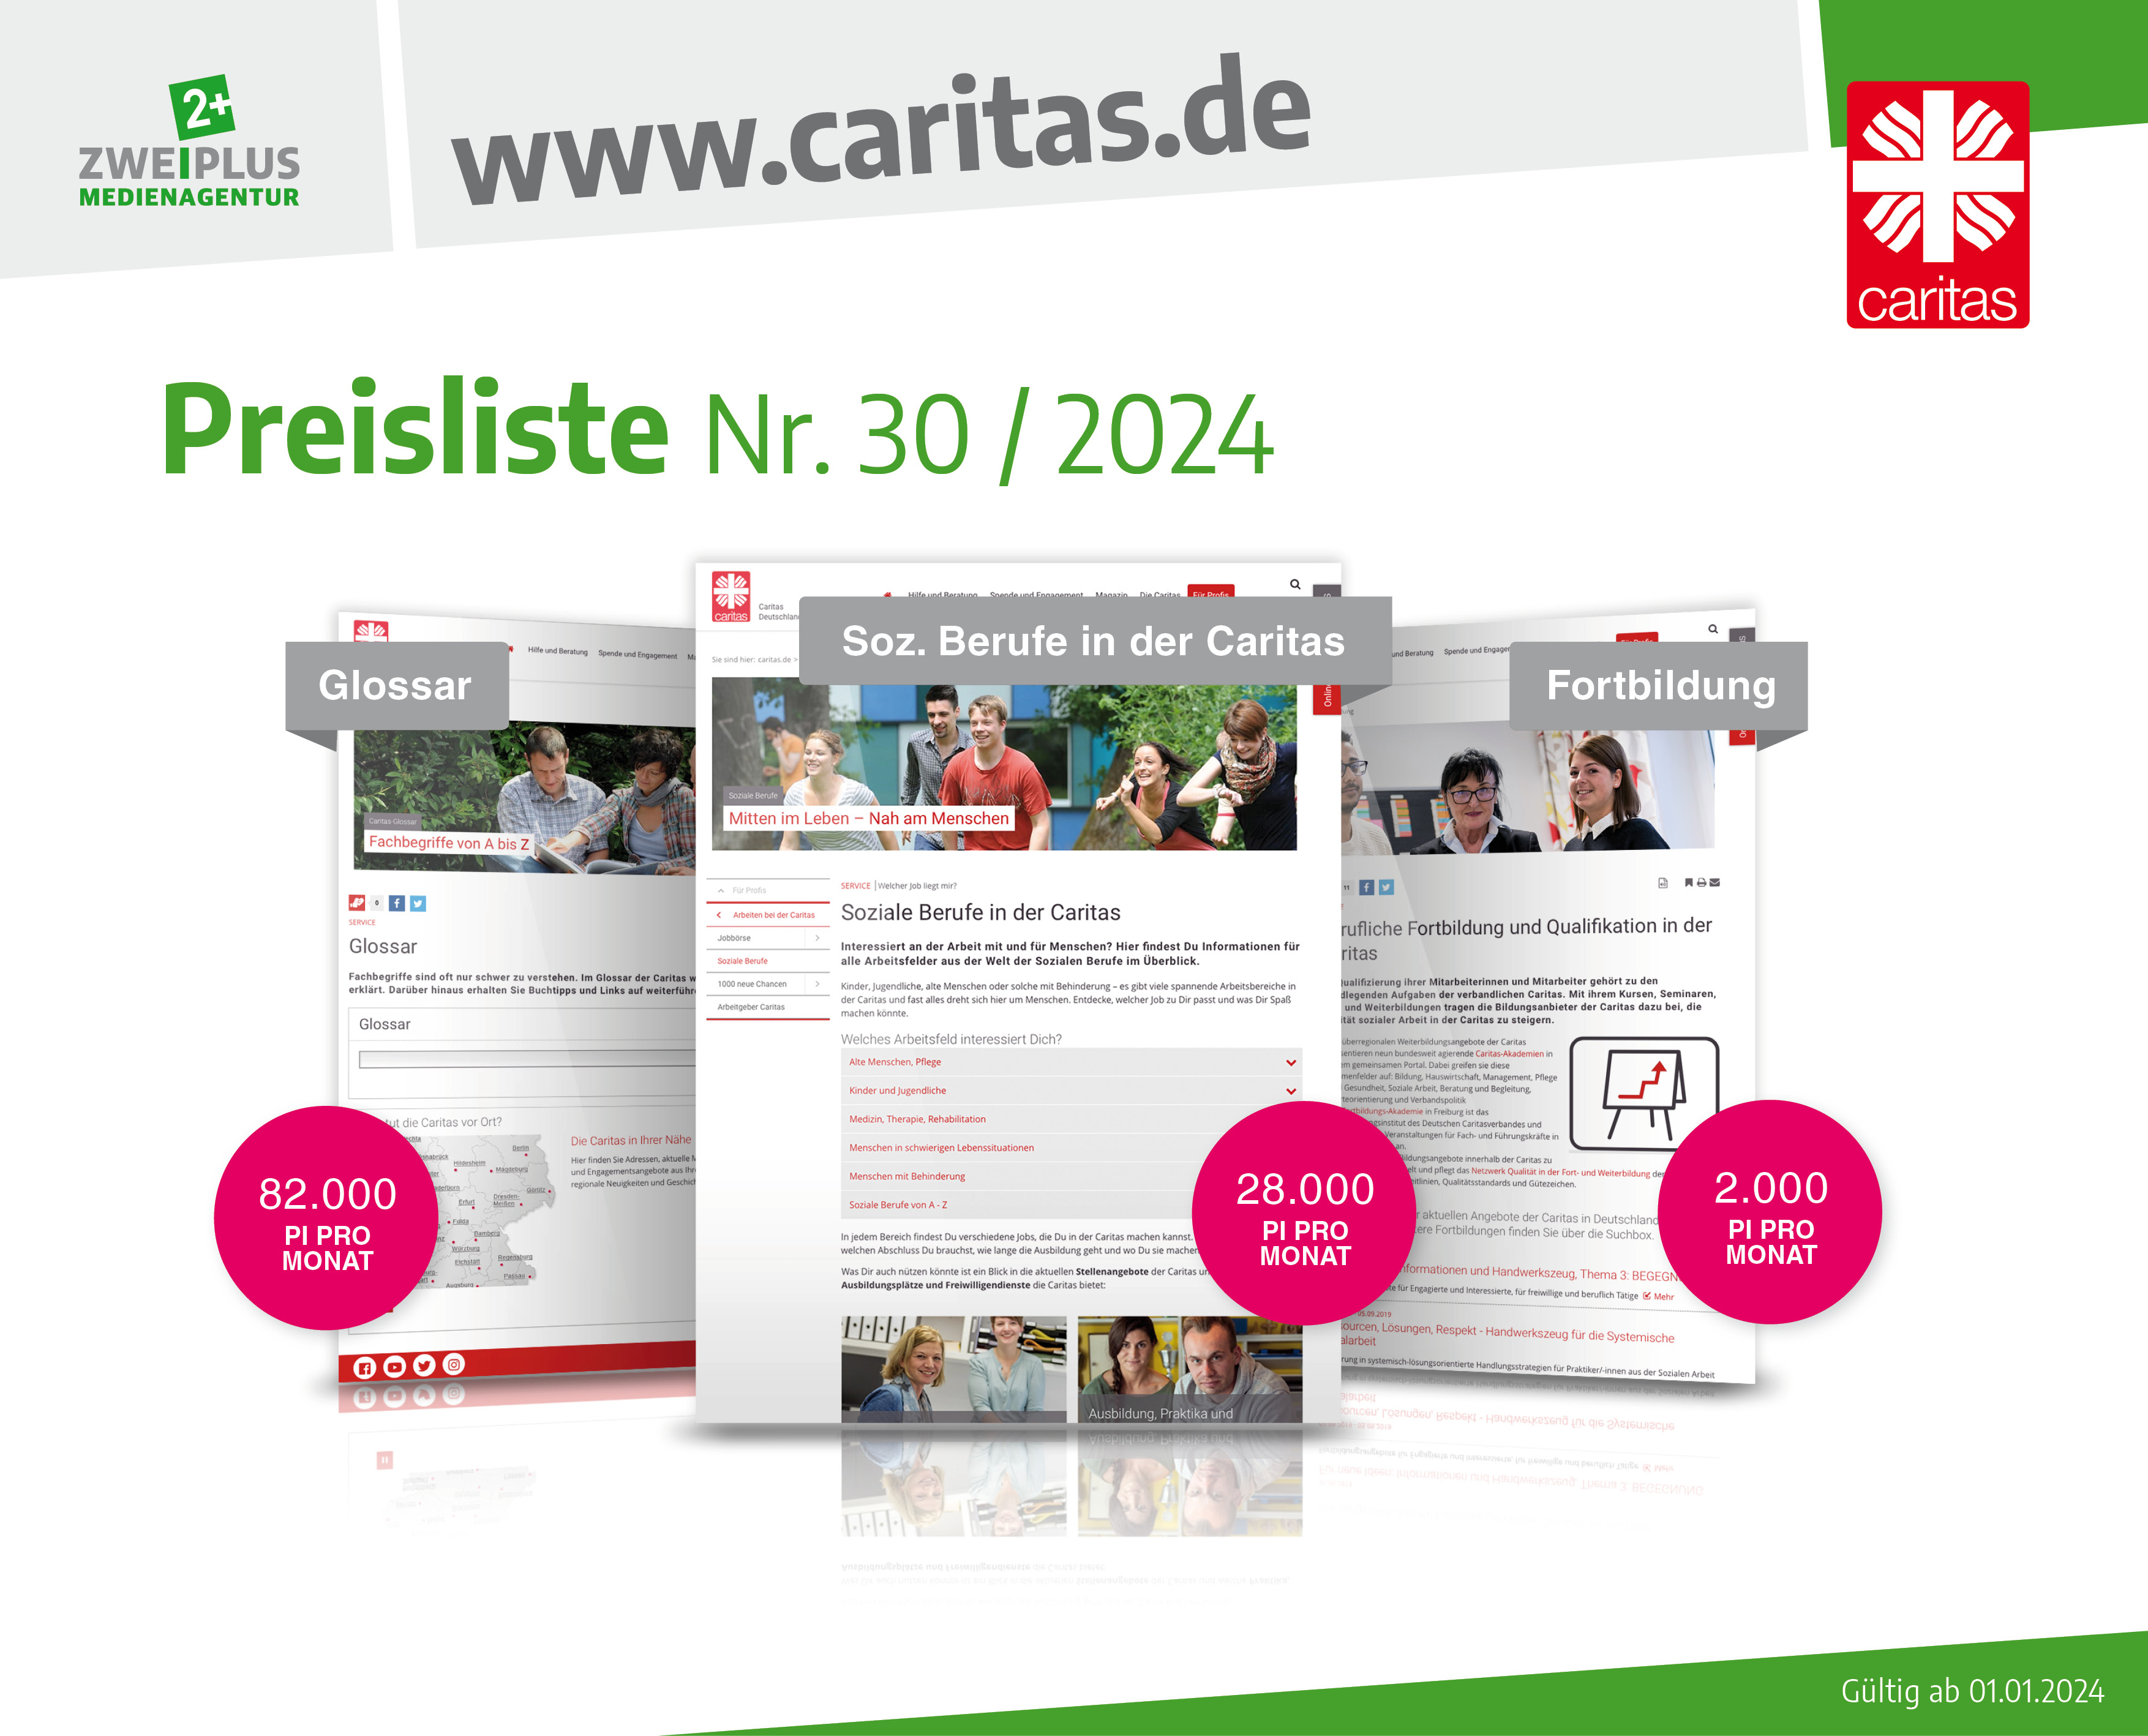 caritas.de, Zweiplus Medienagentur